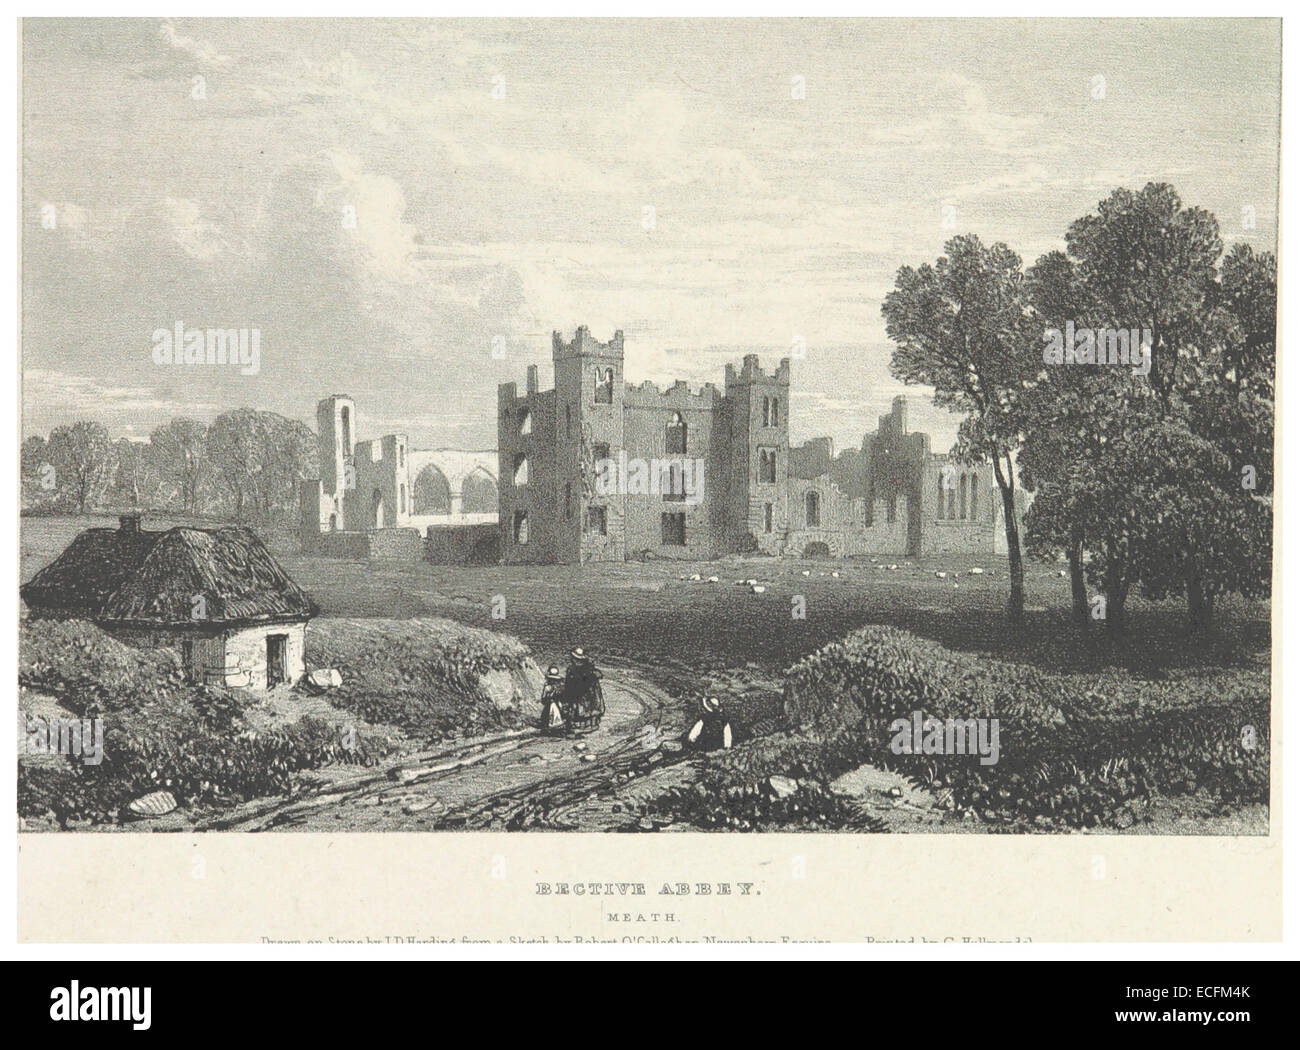 NEWENHAM(1830) p199 MEATH - BECTIVE ABBEY Stock Photo - Alamy